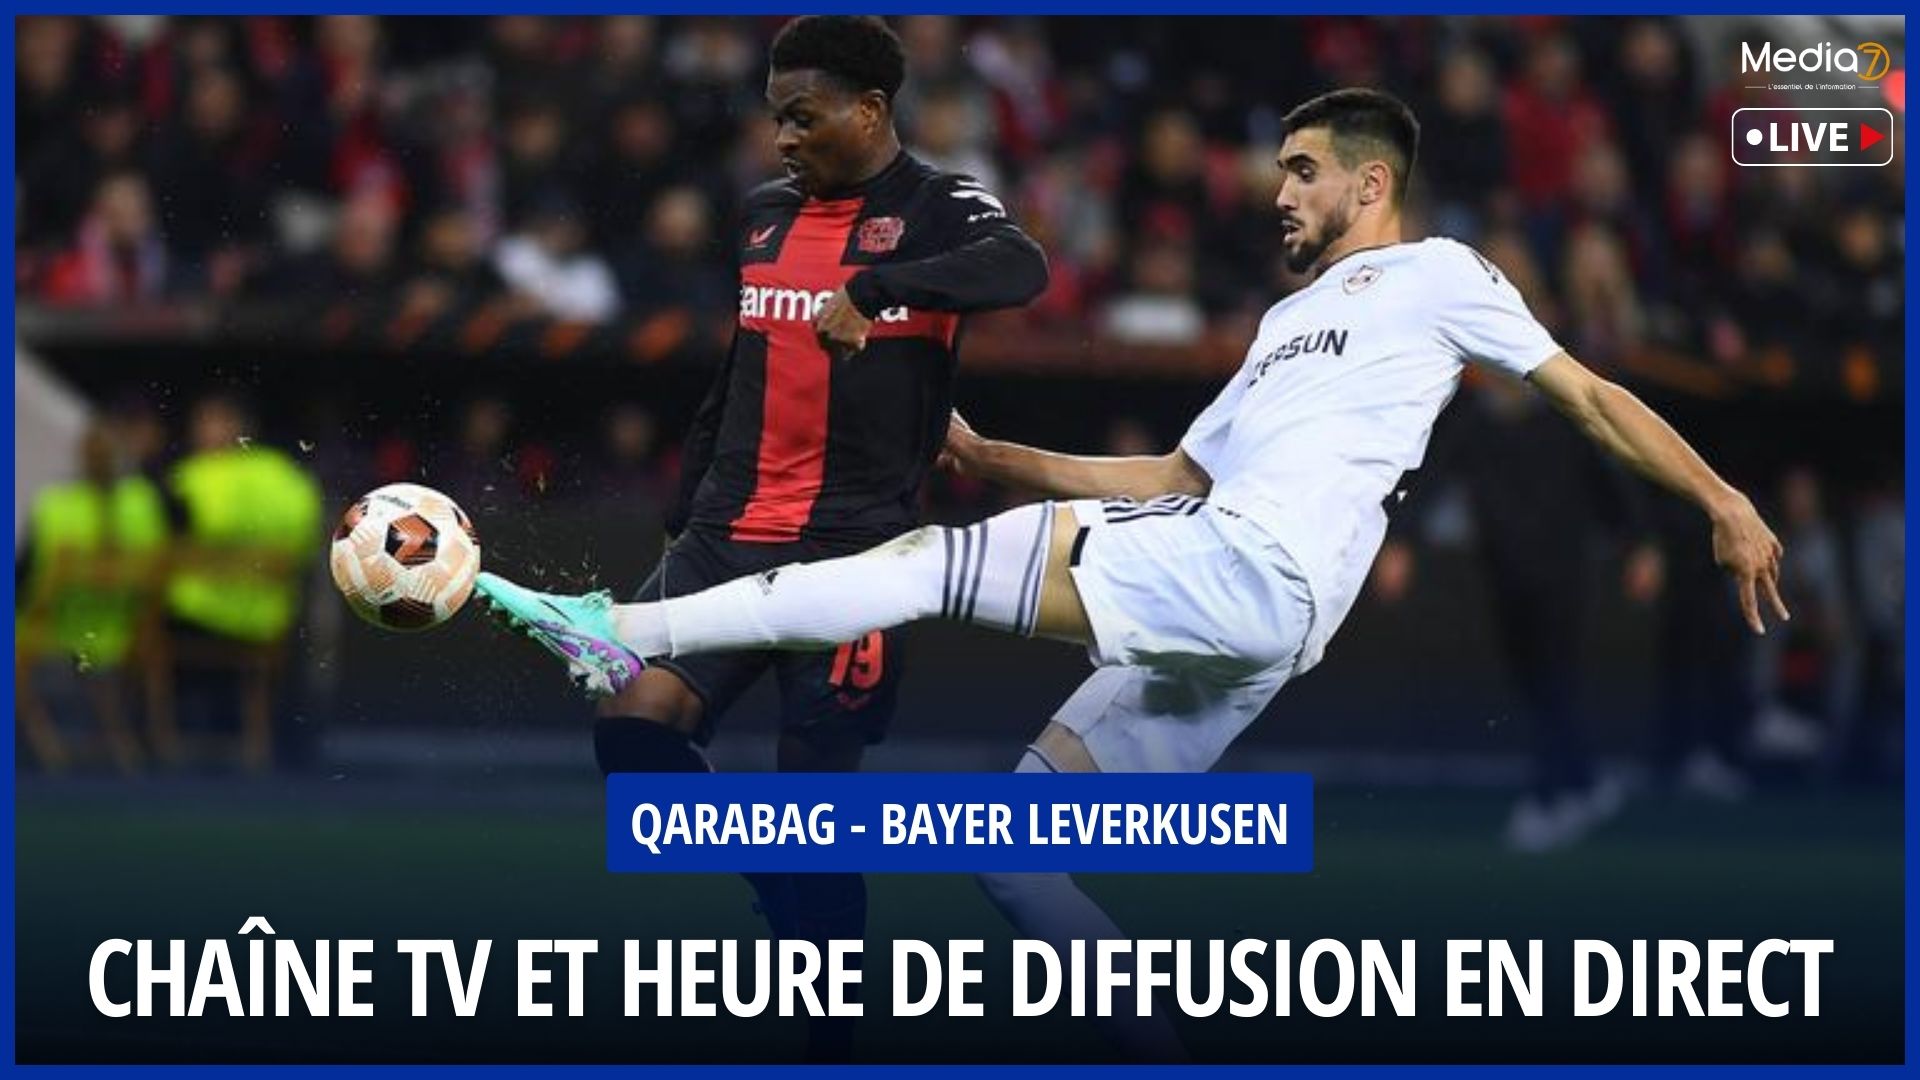 Match Qarabag - Bayer Leverkusen Live: TV Channel and Broadcast Time - Media7